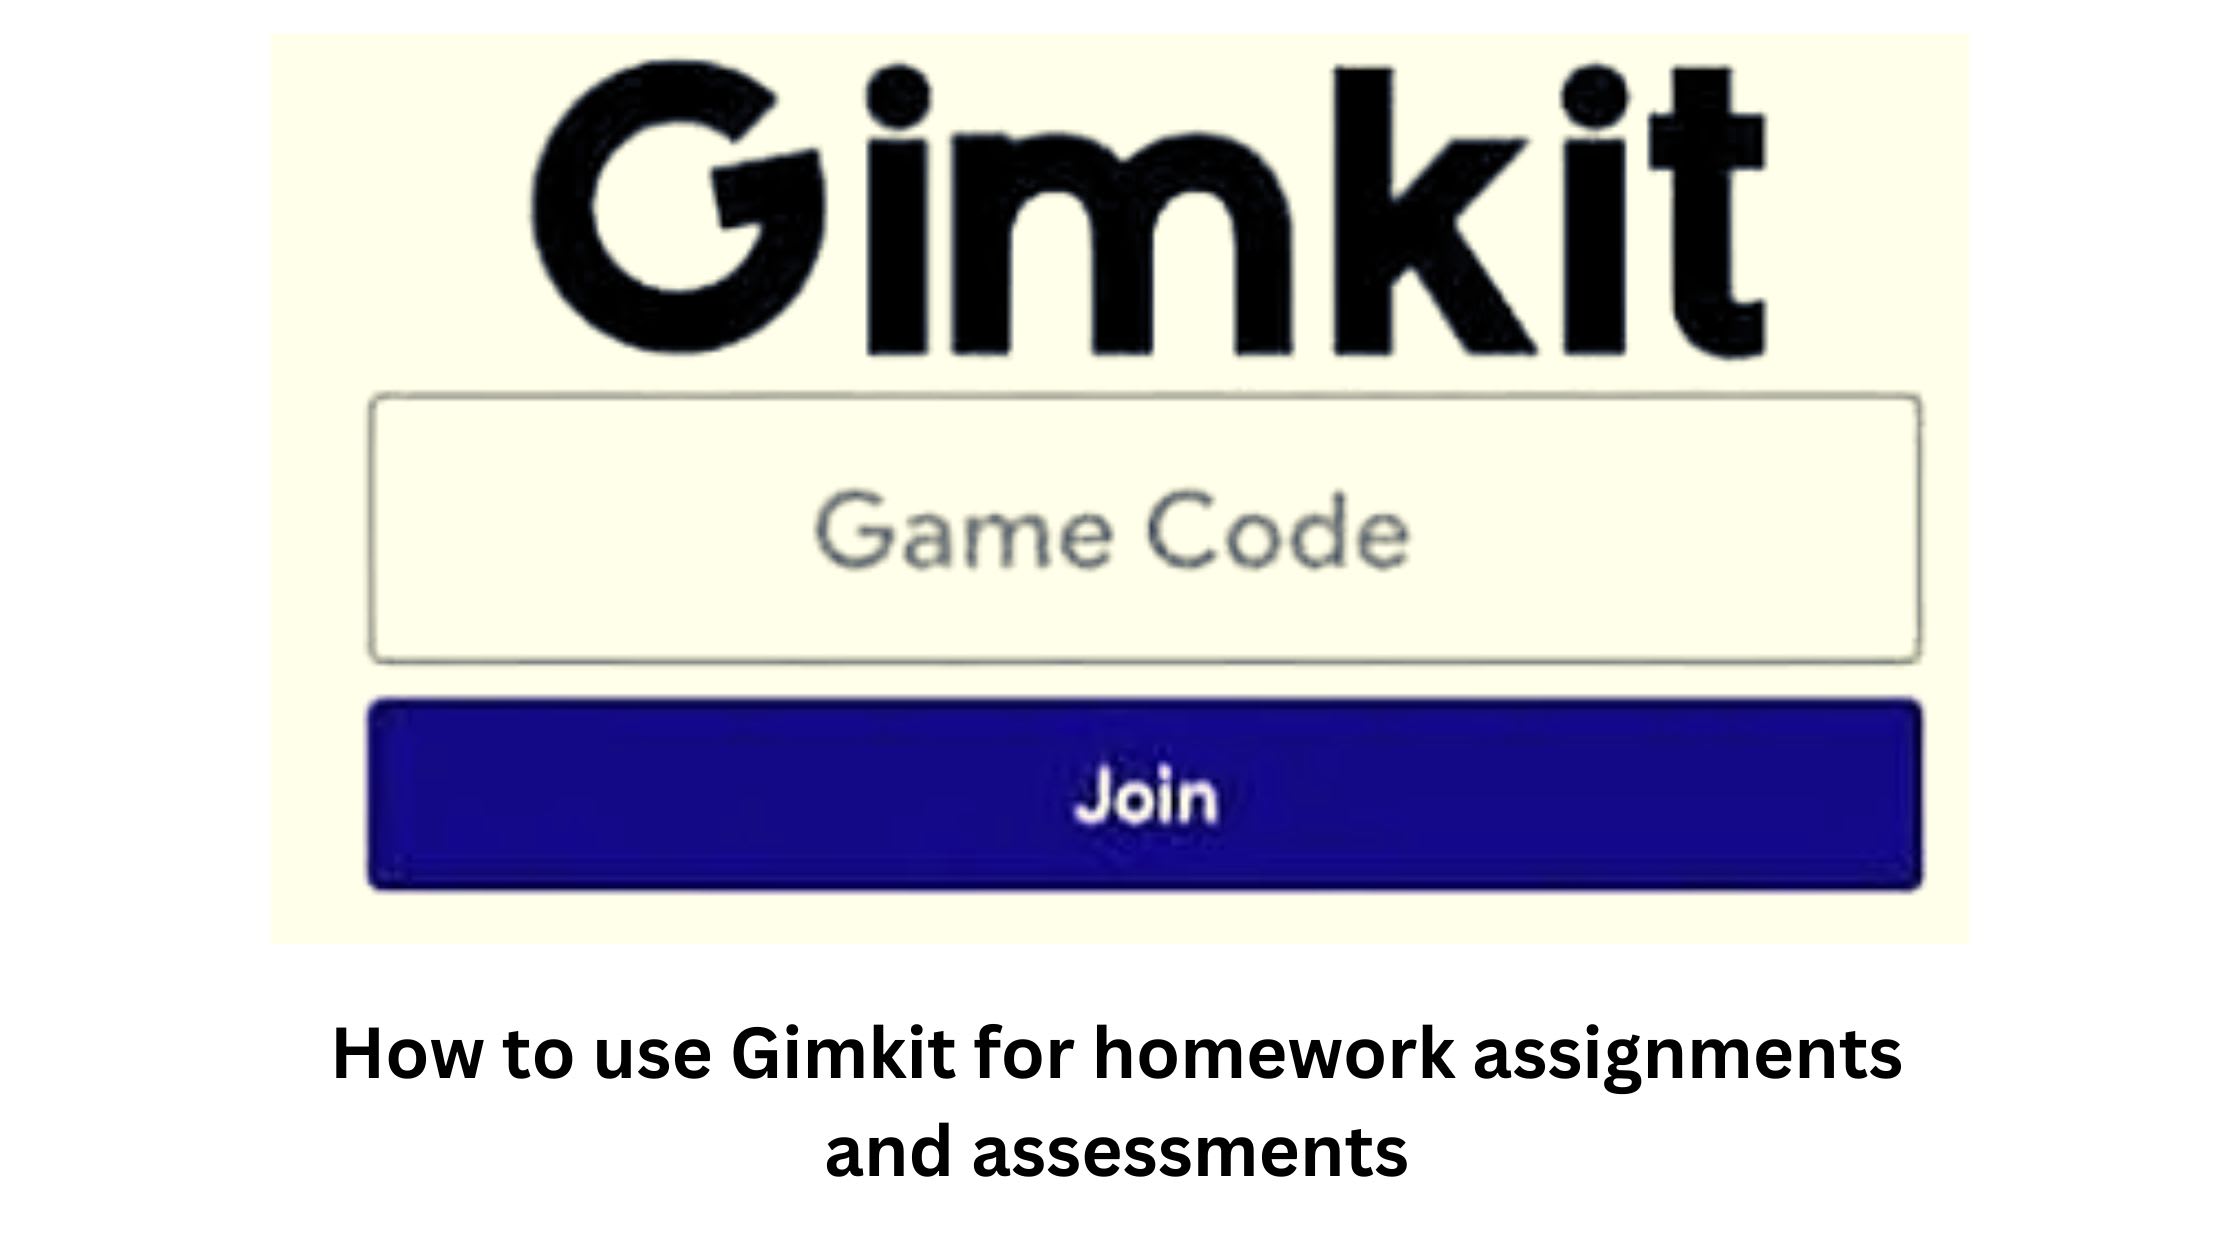 assign gimkit as homework